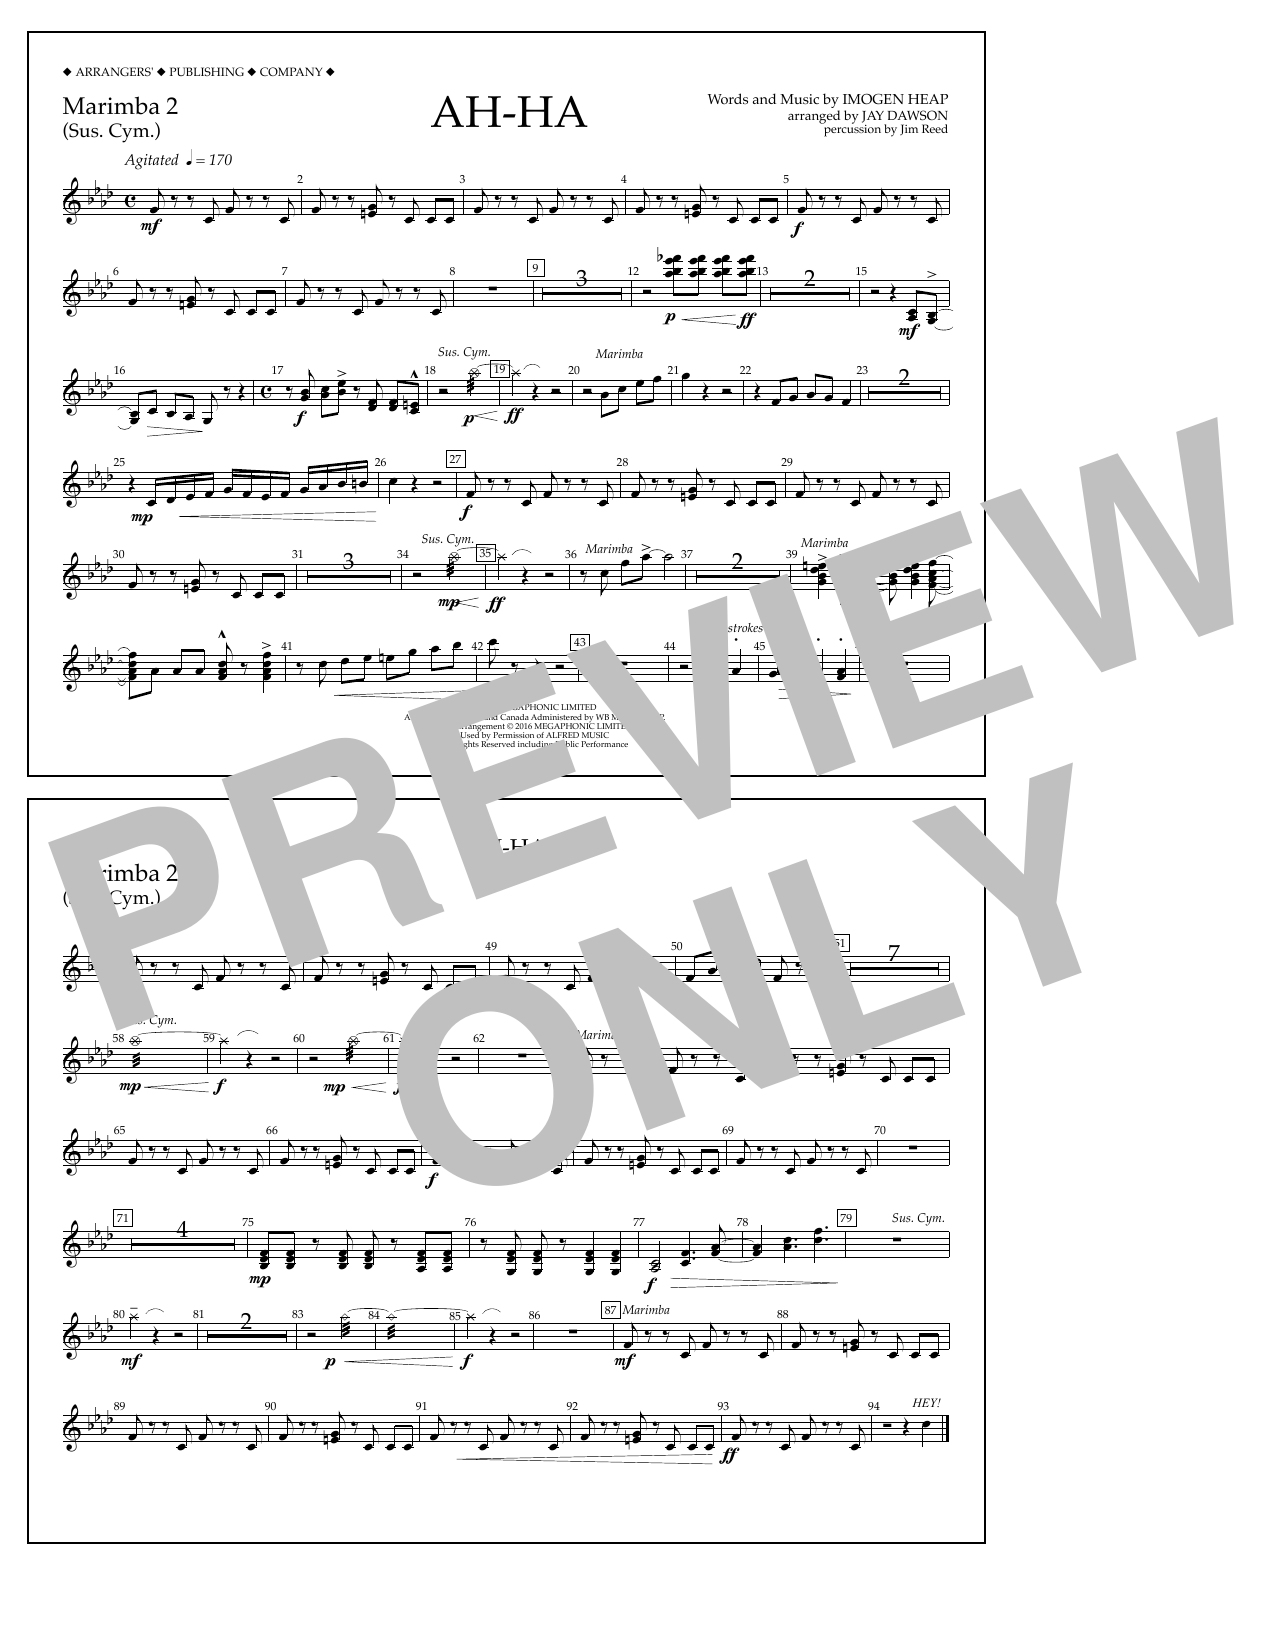 Download Jay Dawson Ah-ha - Marimba 2 Sheet Music